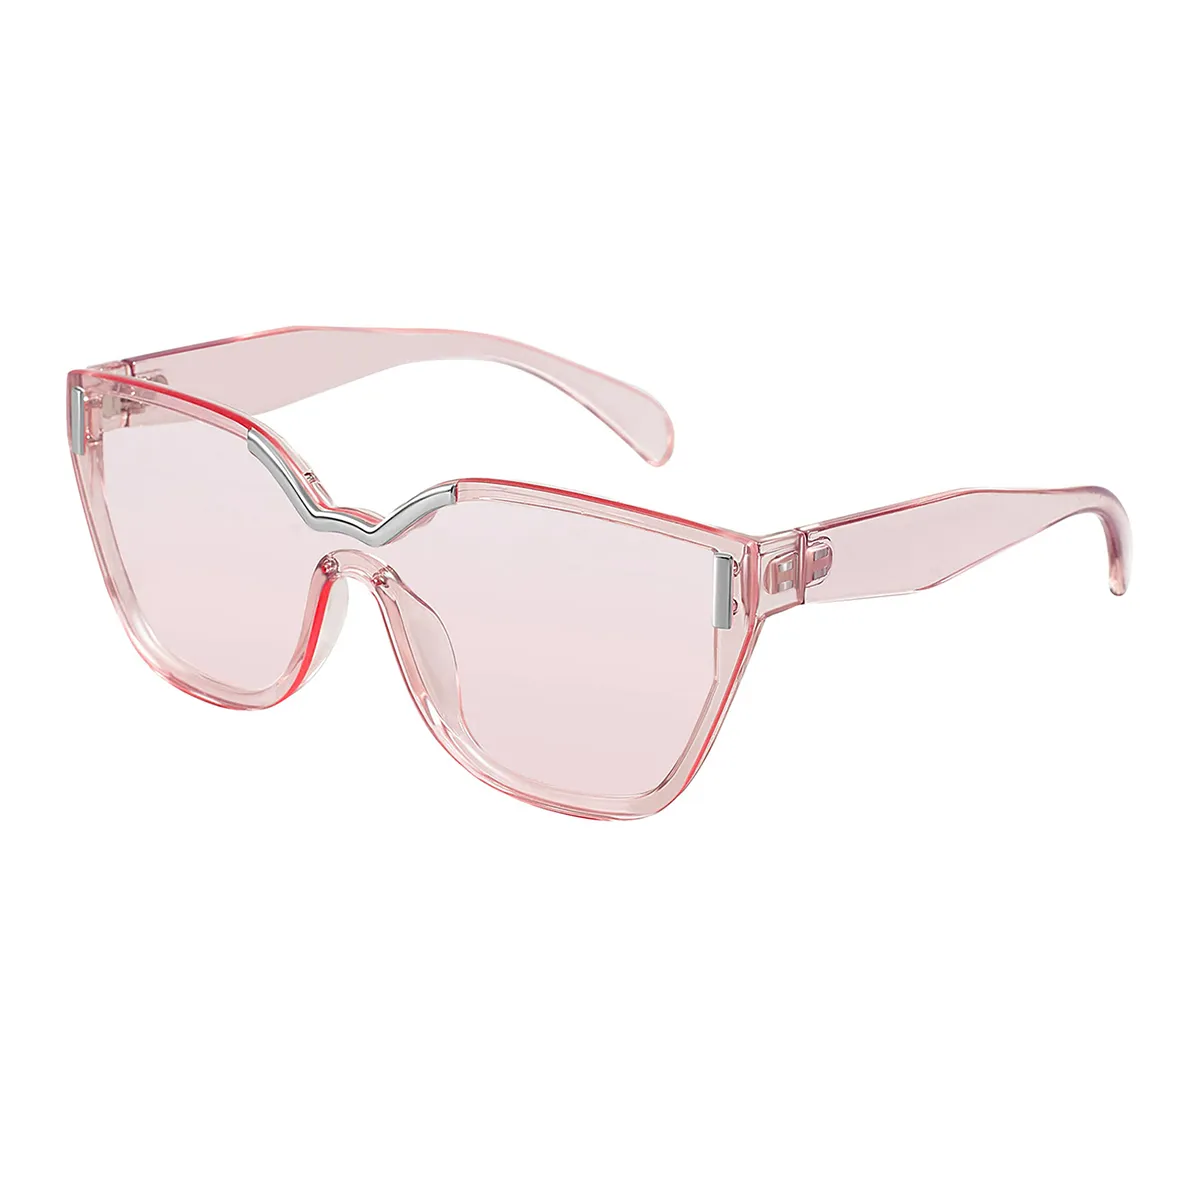 Wanda - Geometric Pink Sunglasses for Women